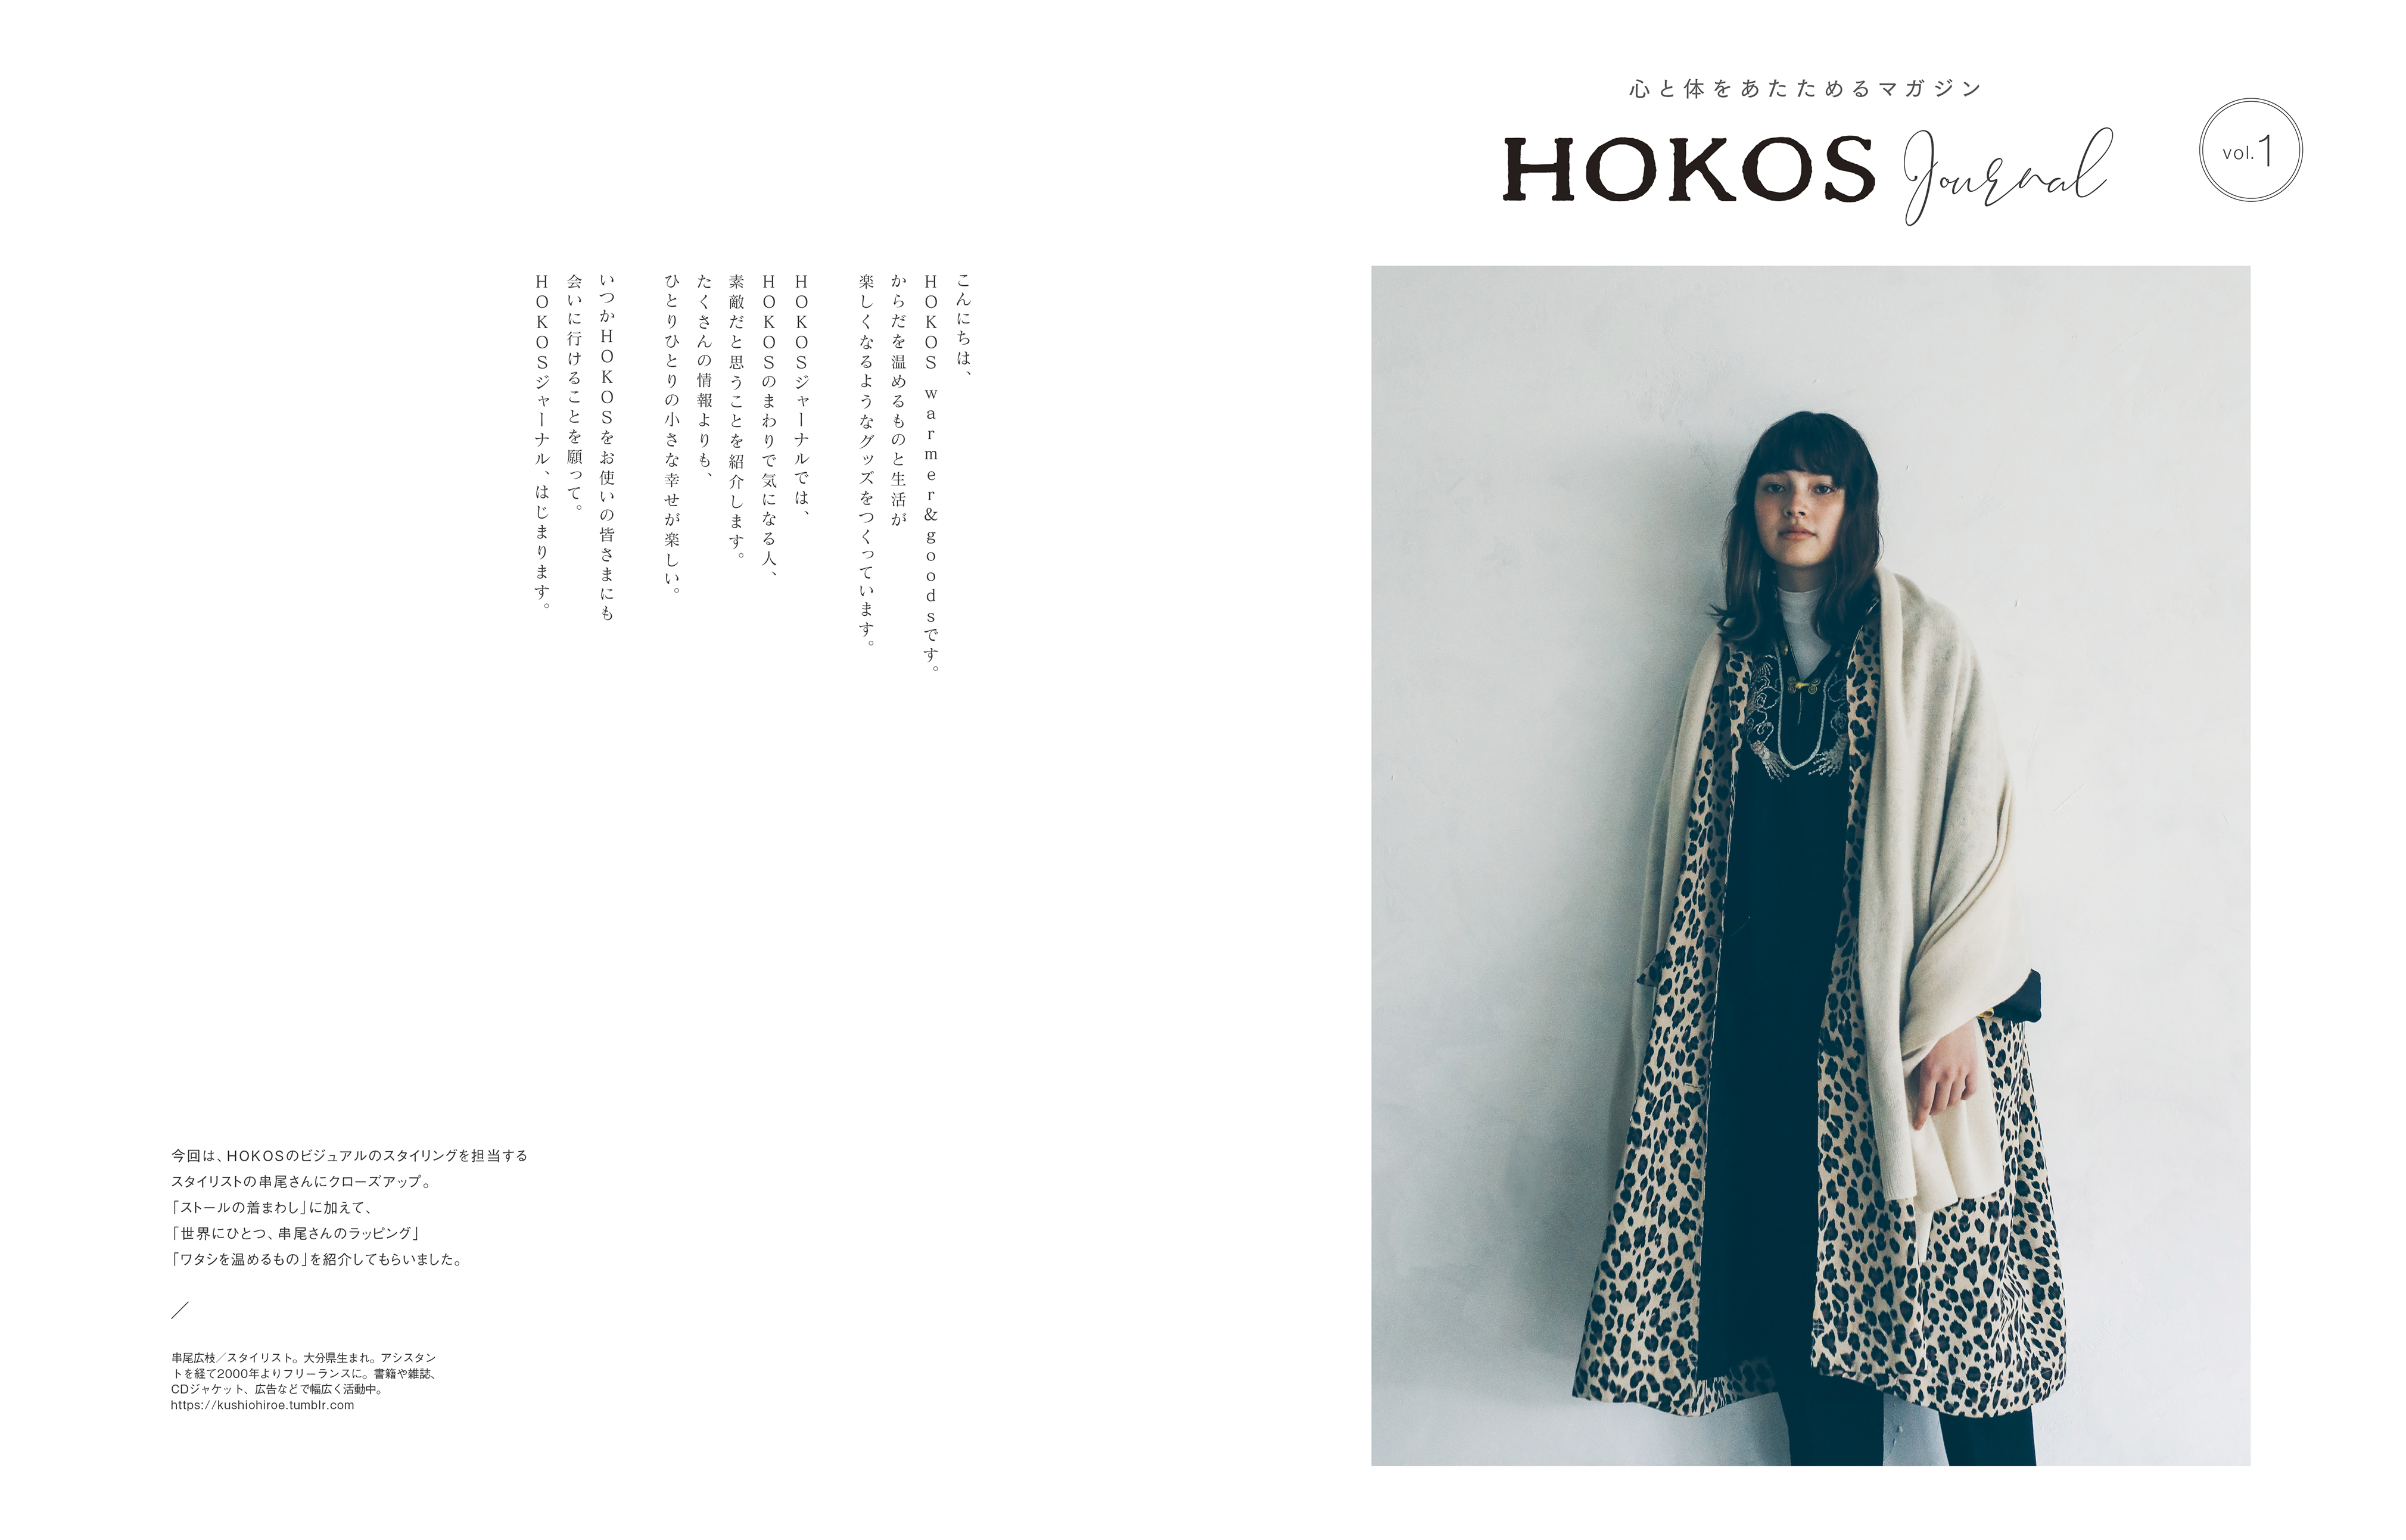 HOKOS journal Vol.1